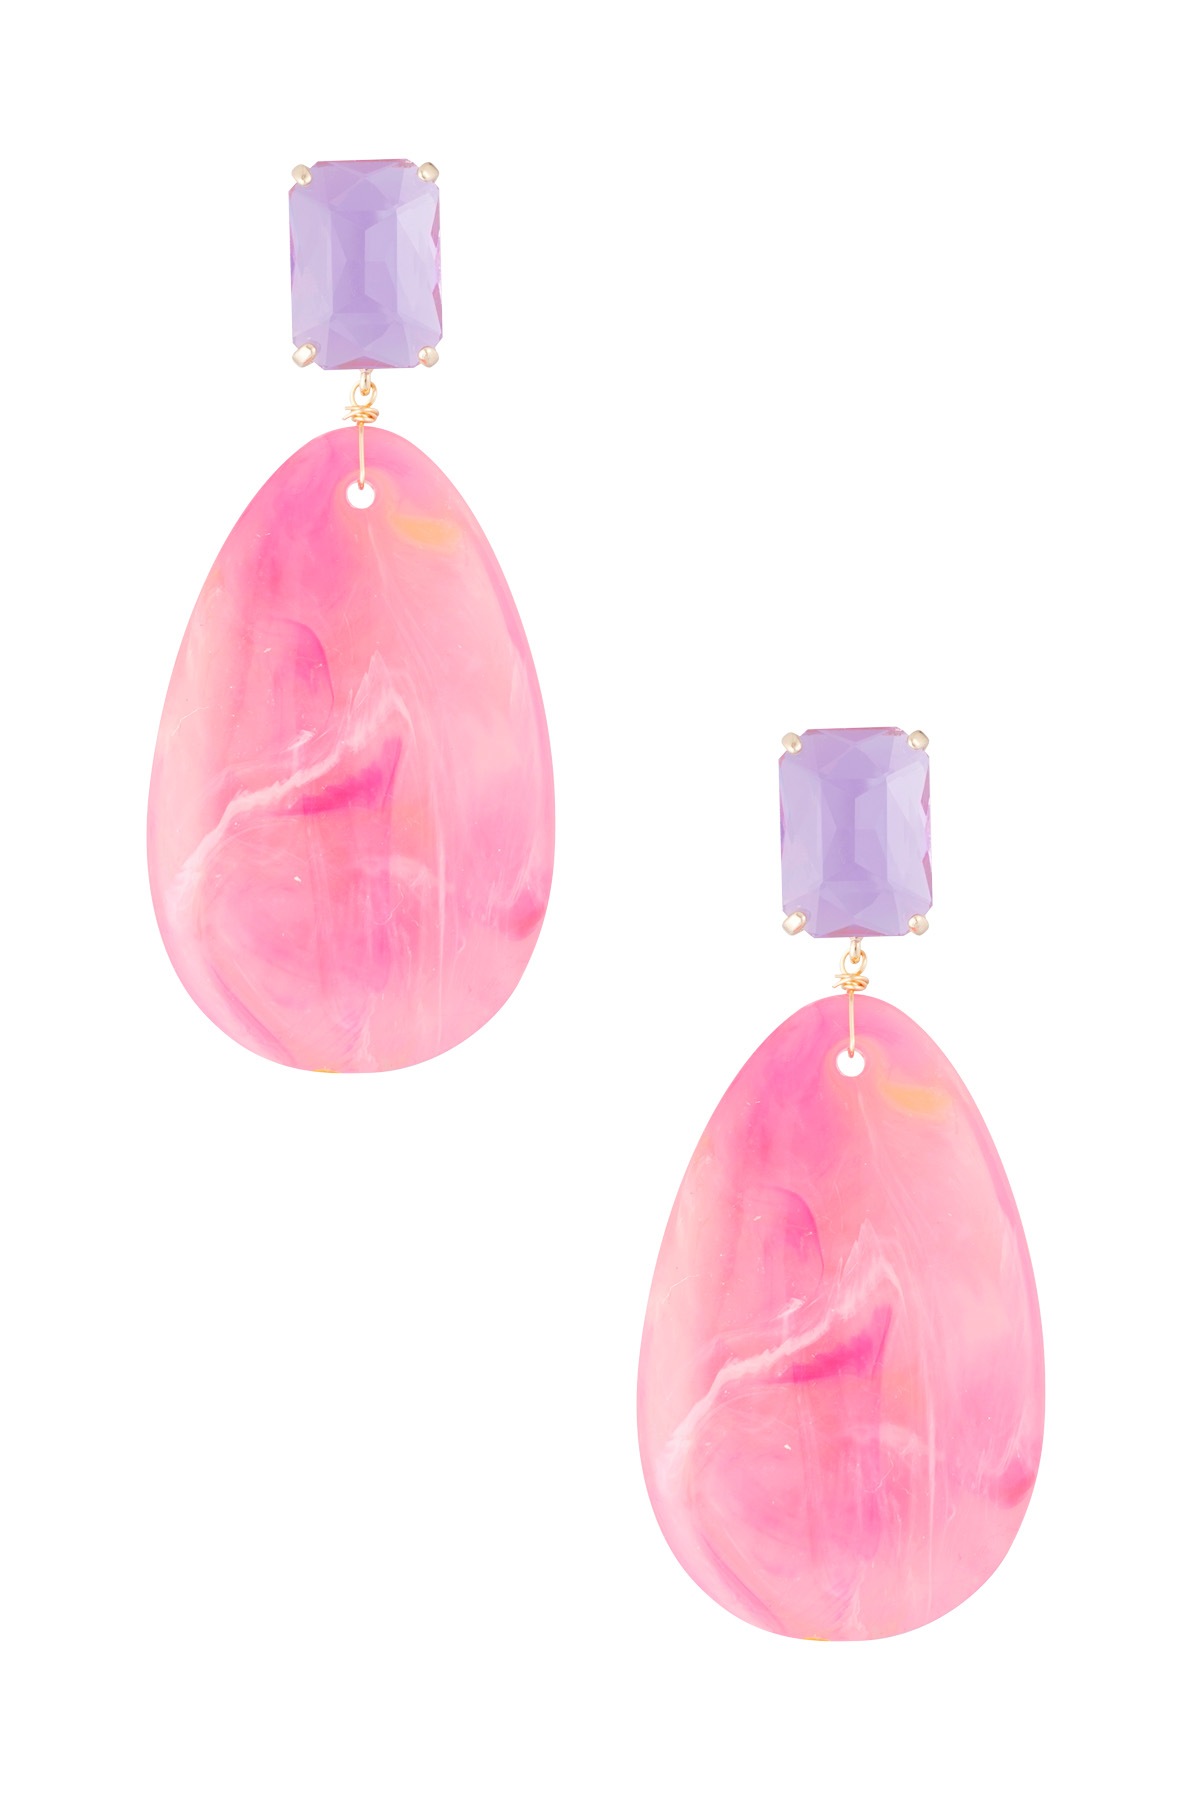 glass earrings with oval stone - fuchsia 